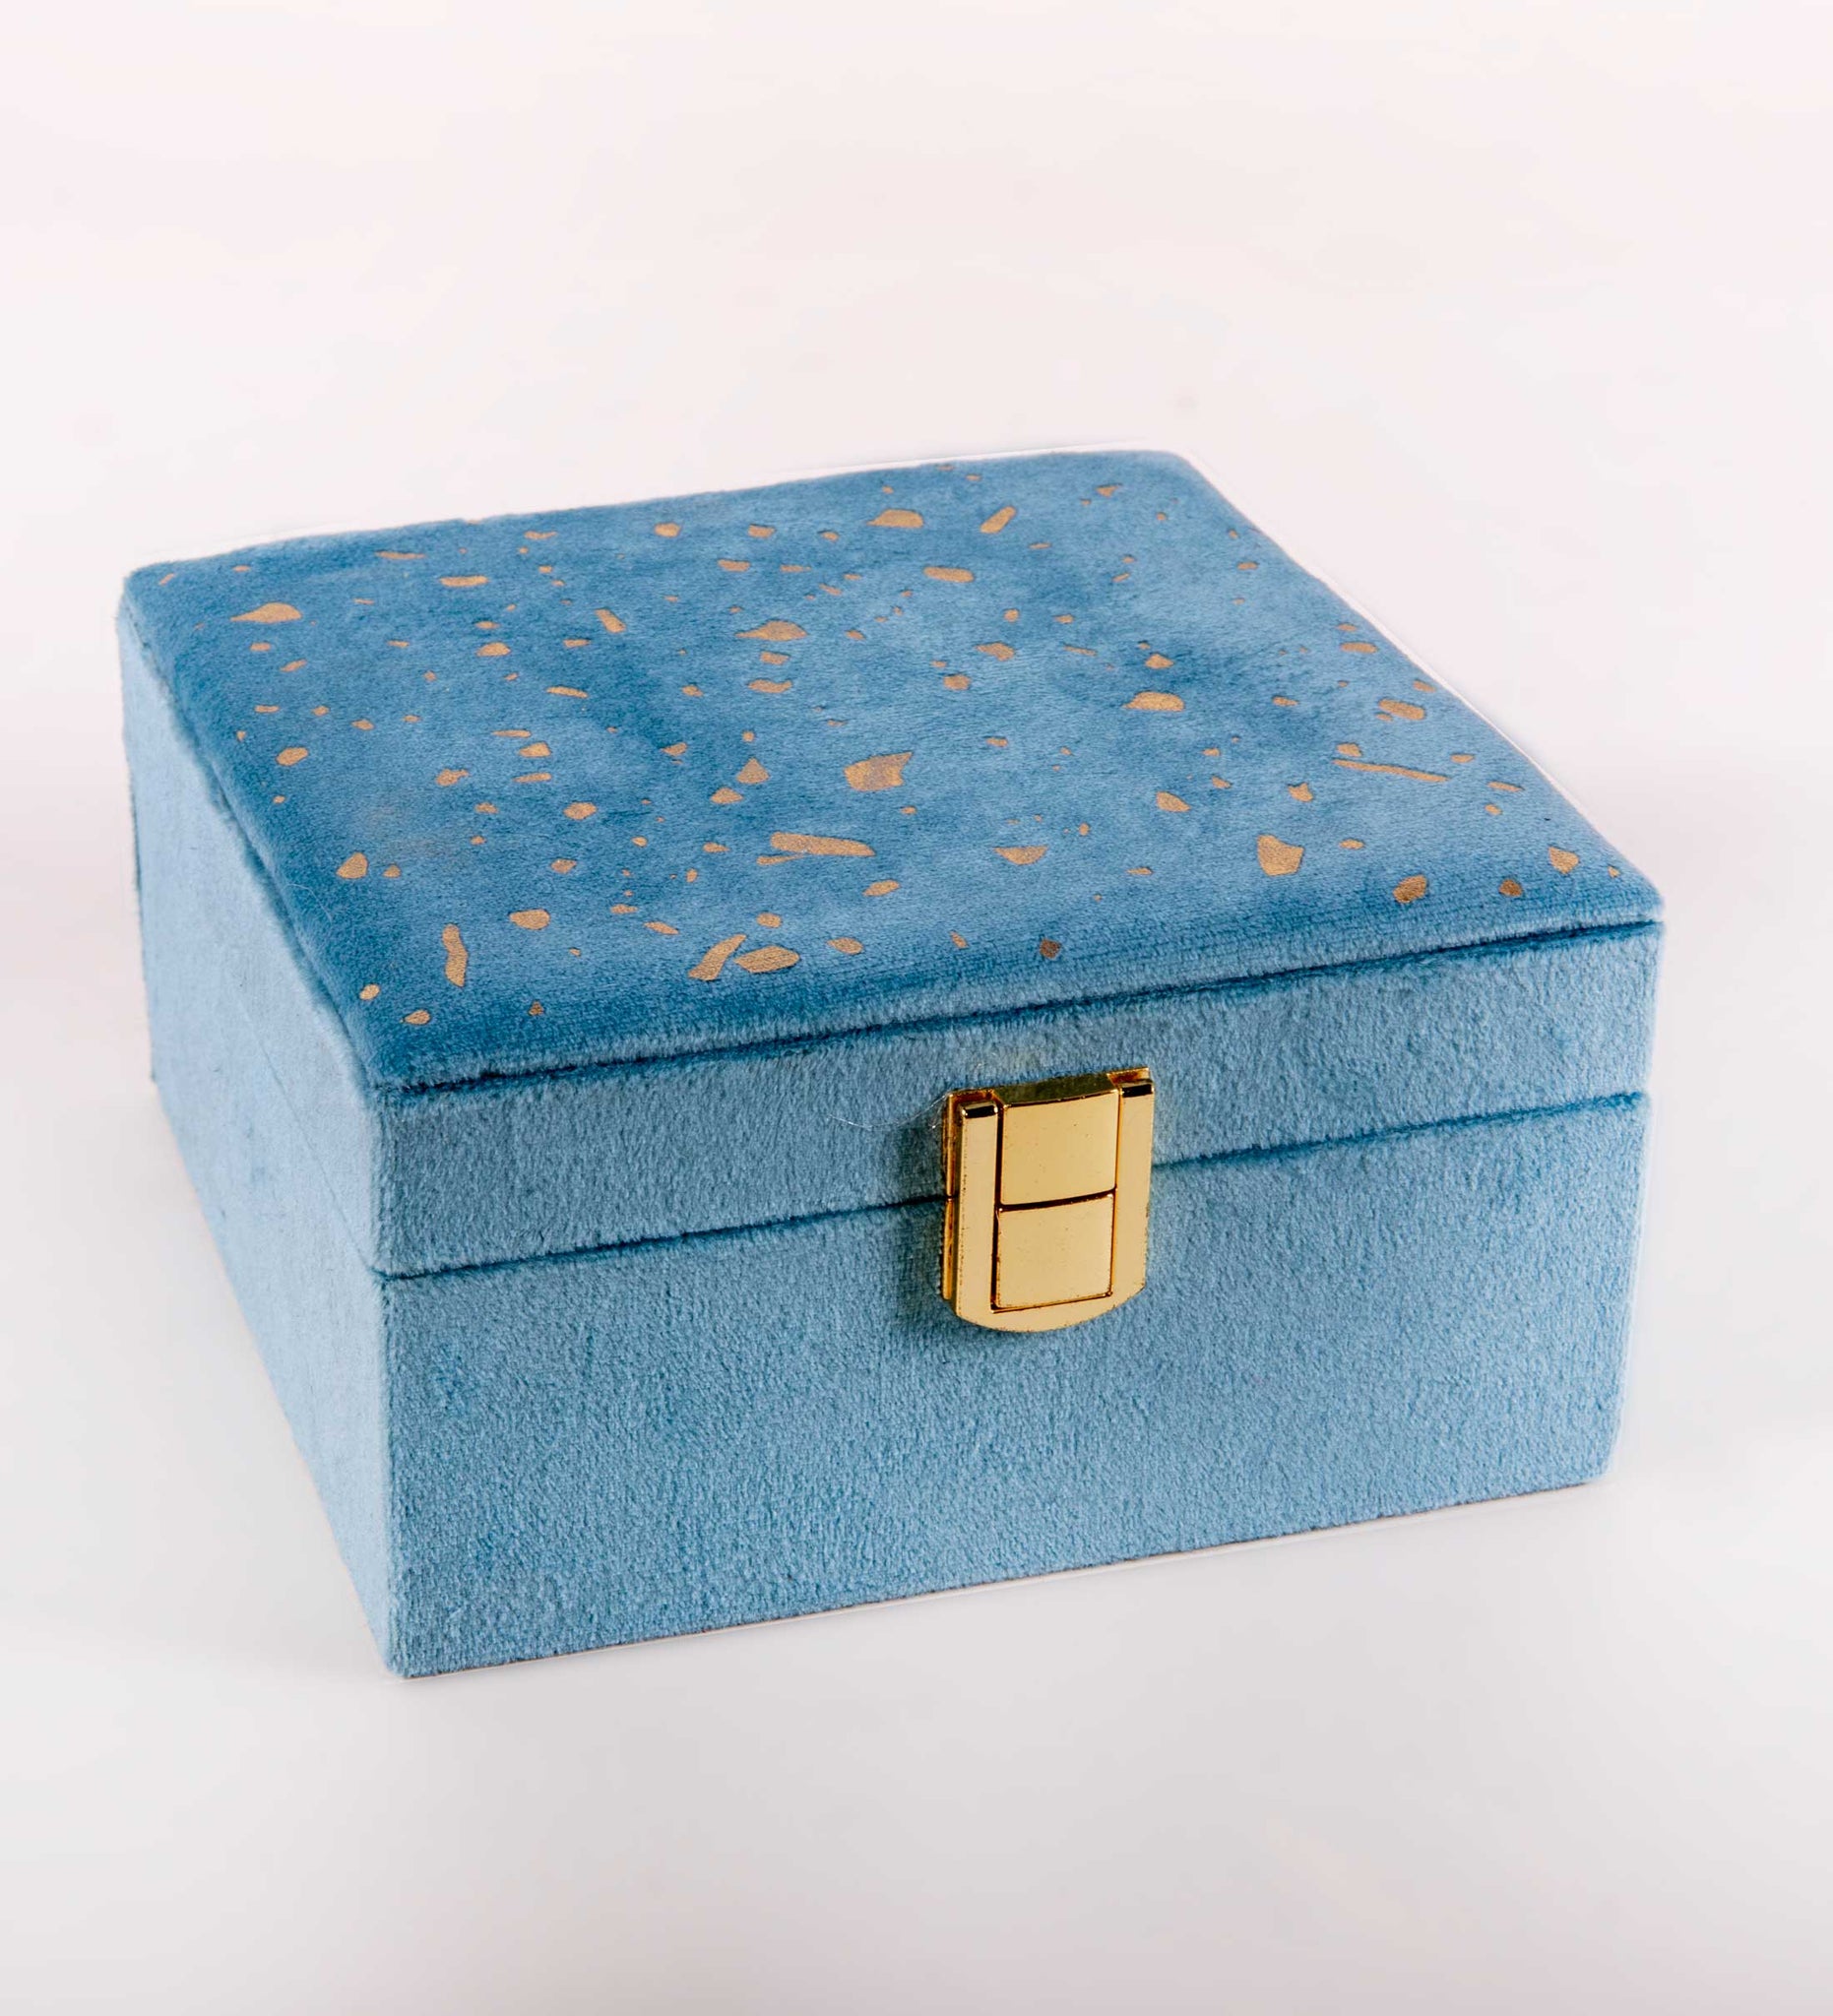 Caja cuad 15*8*15 terc azul pintitas dorada